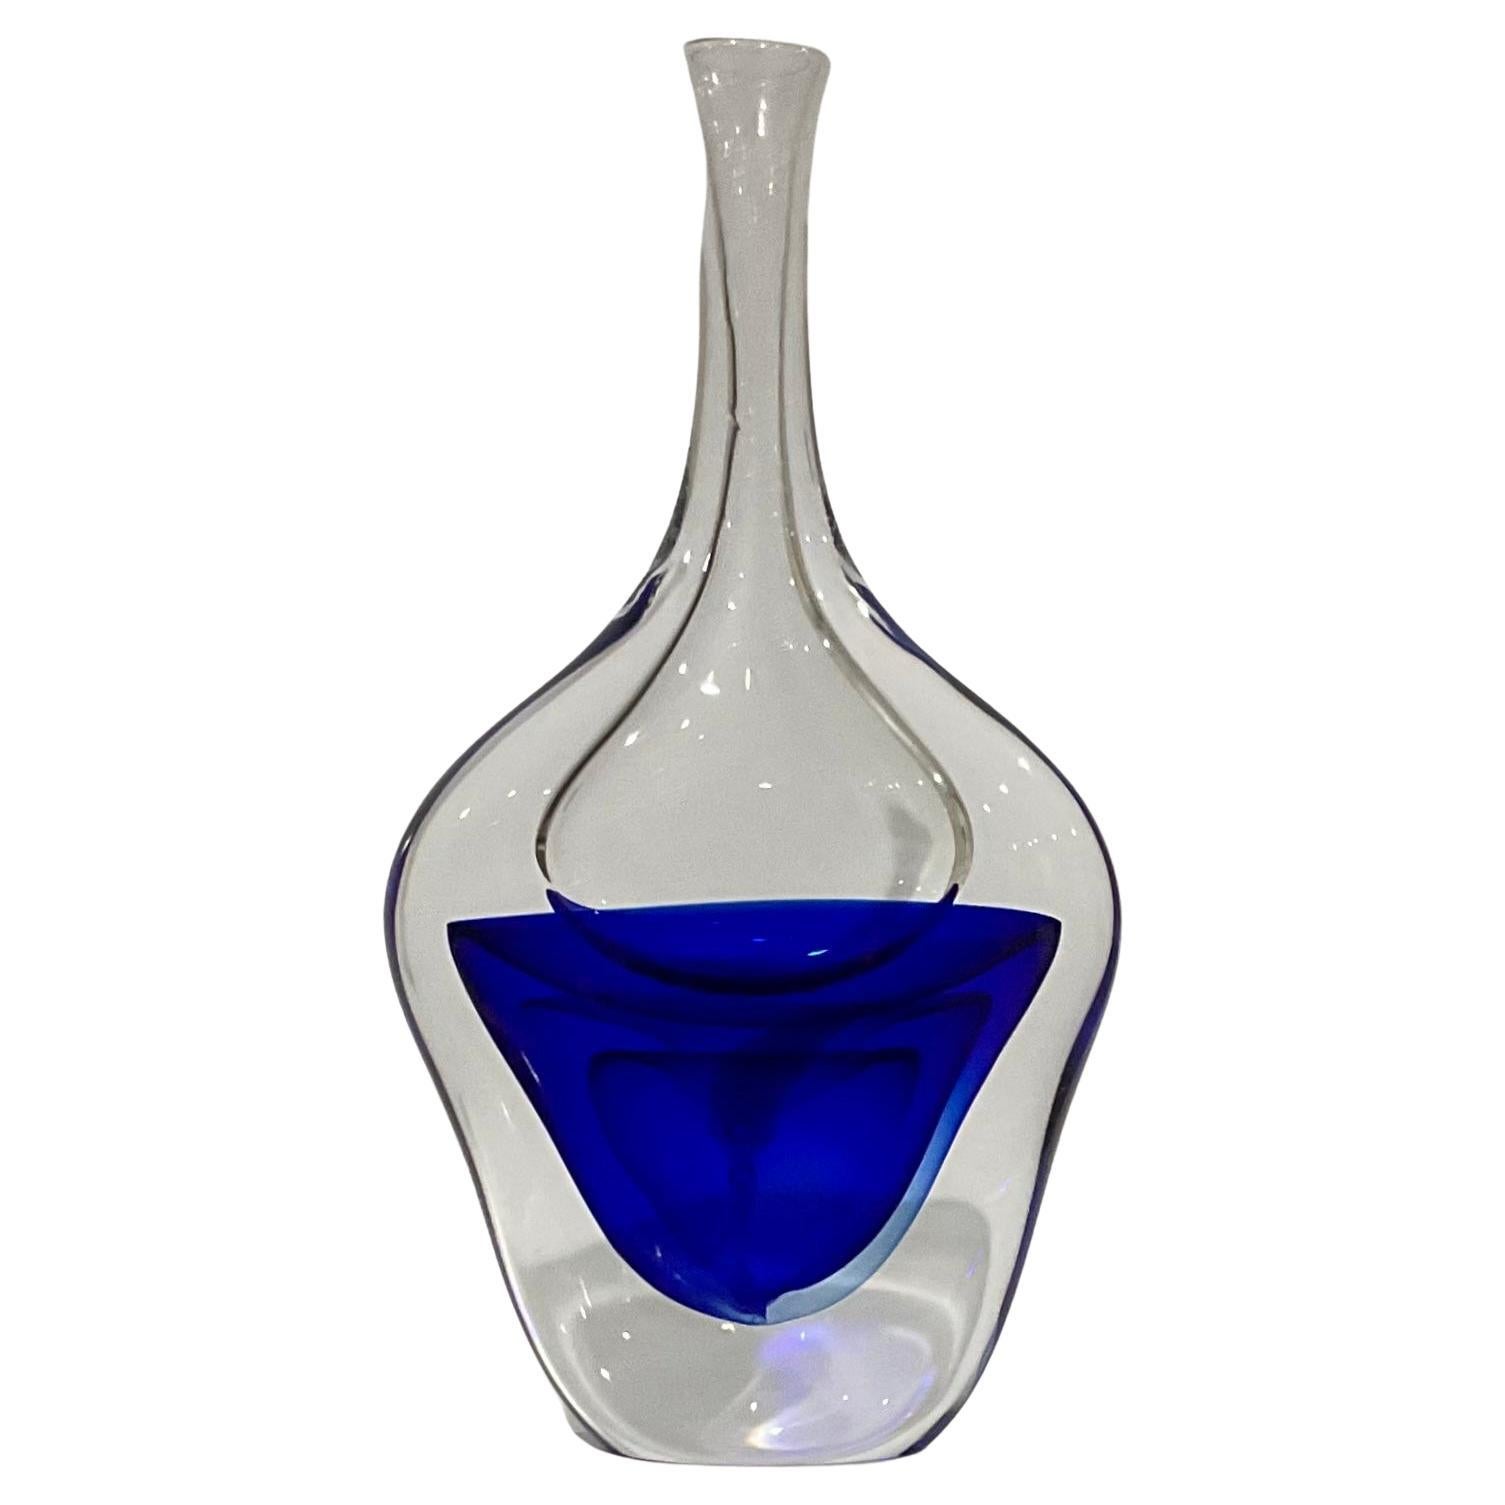 Antonio Da Ros Signiert Cenedese Muranoglas Vase Circa 1960er Jahre geschichtet blau 